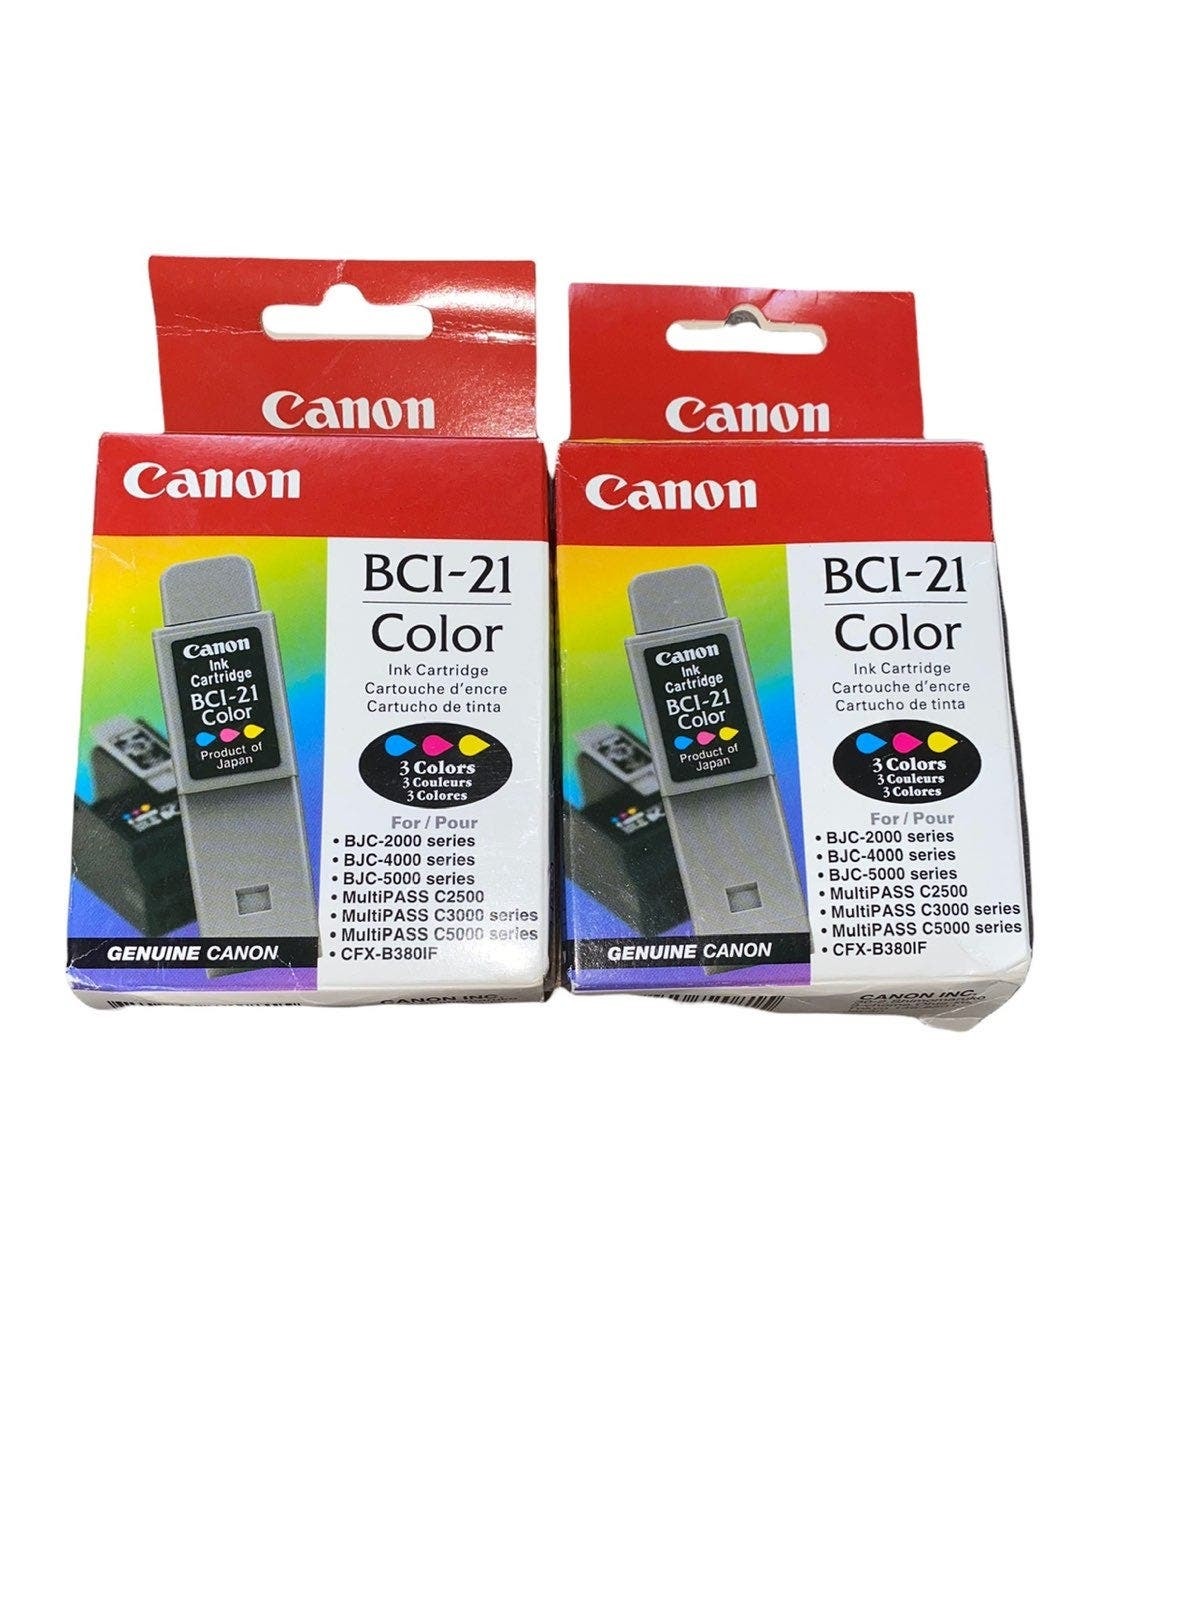 Canon Genuine BCI-21 Black Ink BJC-4000, BJC-5500 MultiPass CFX-B380IF NEW 2 - $18.46